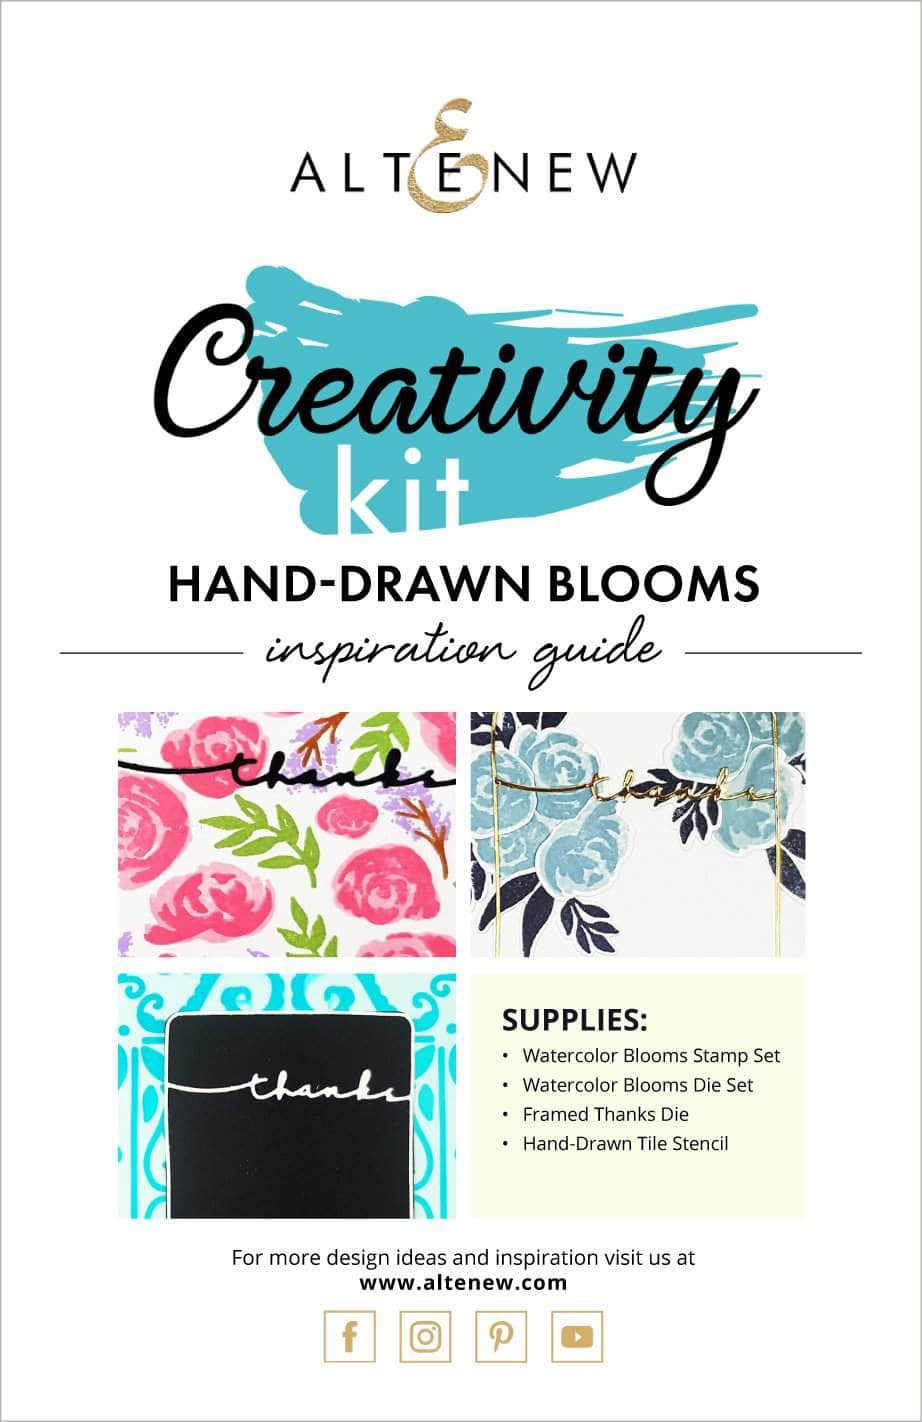 Printed Media Hand-drawn Blooms Creativity Kit Inspiration Guide